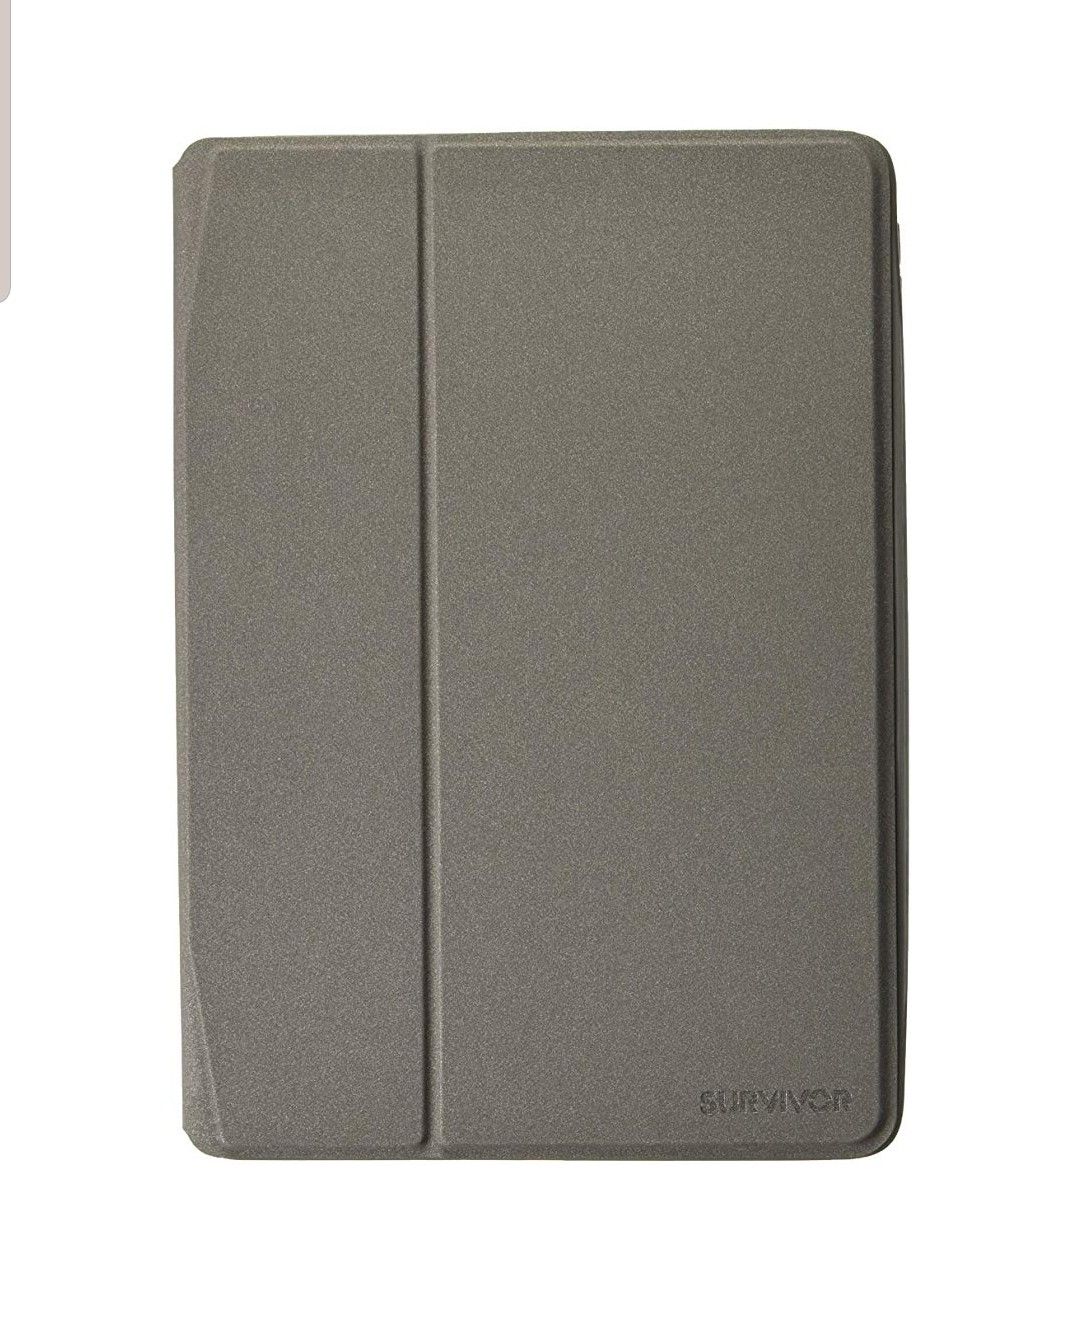 Griffin Technology iPad Pro 10.5 Impact Resistant Protective Folio, [Slim]Survivor Journey Folio, Space Gray